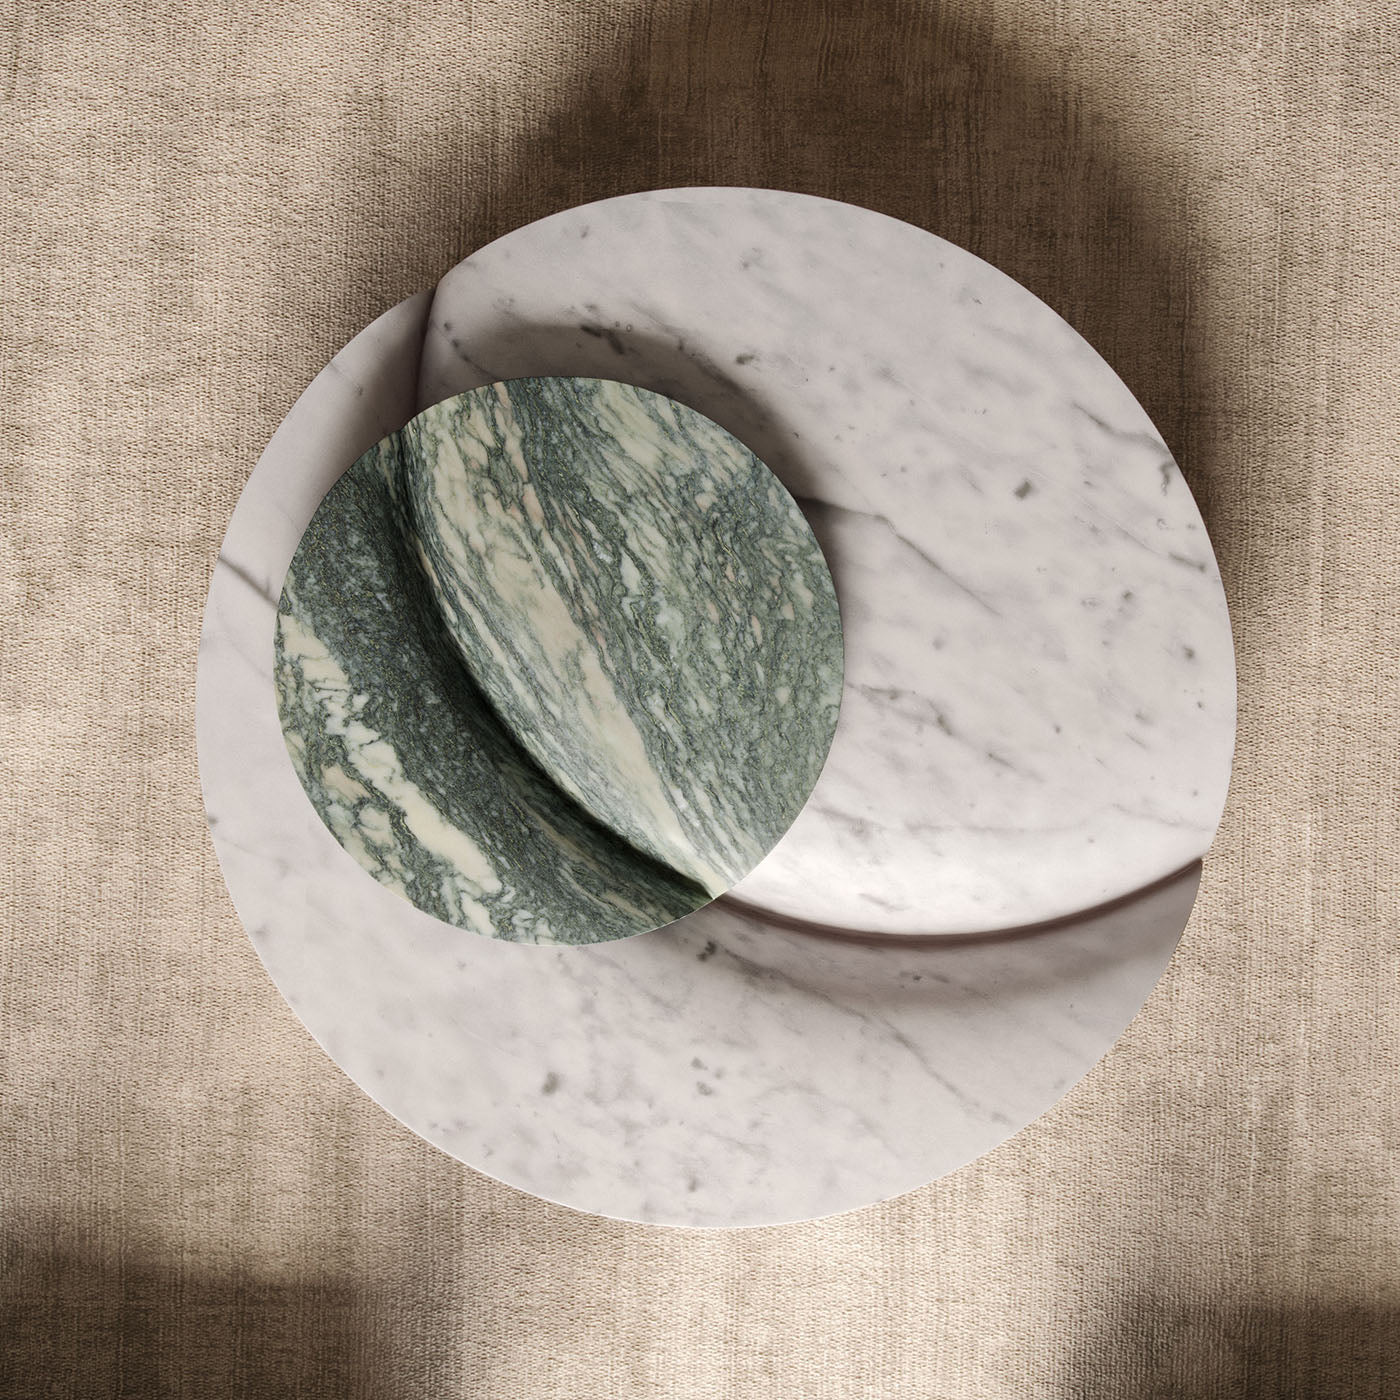 Luna Table in Green Luana and White Carrara Marble - Alternative view 2